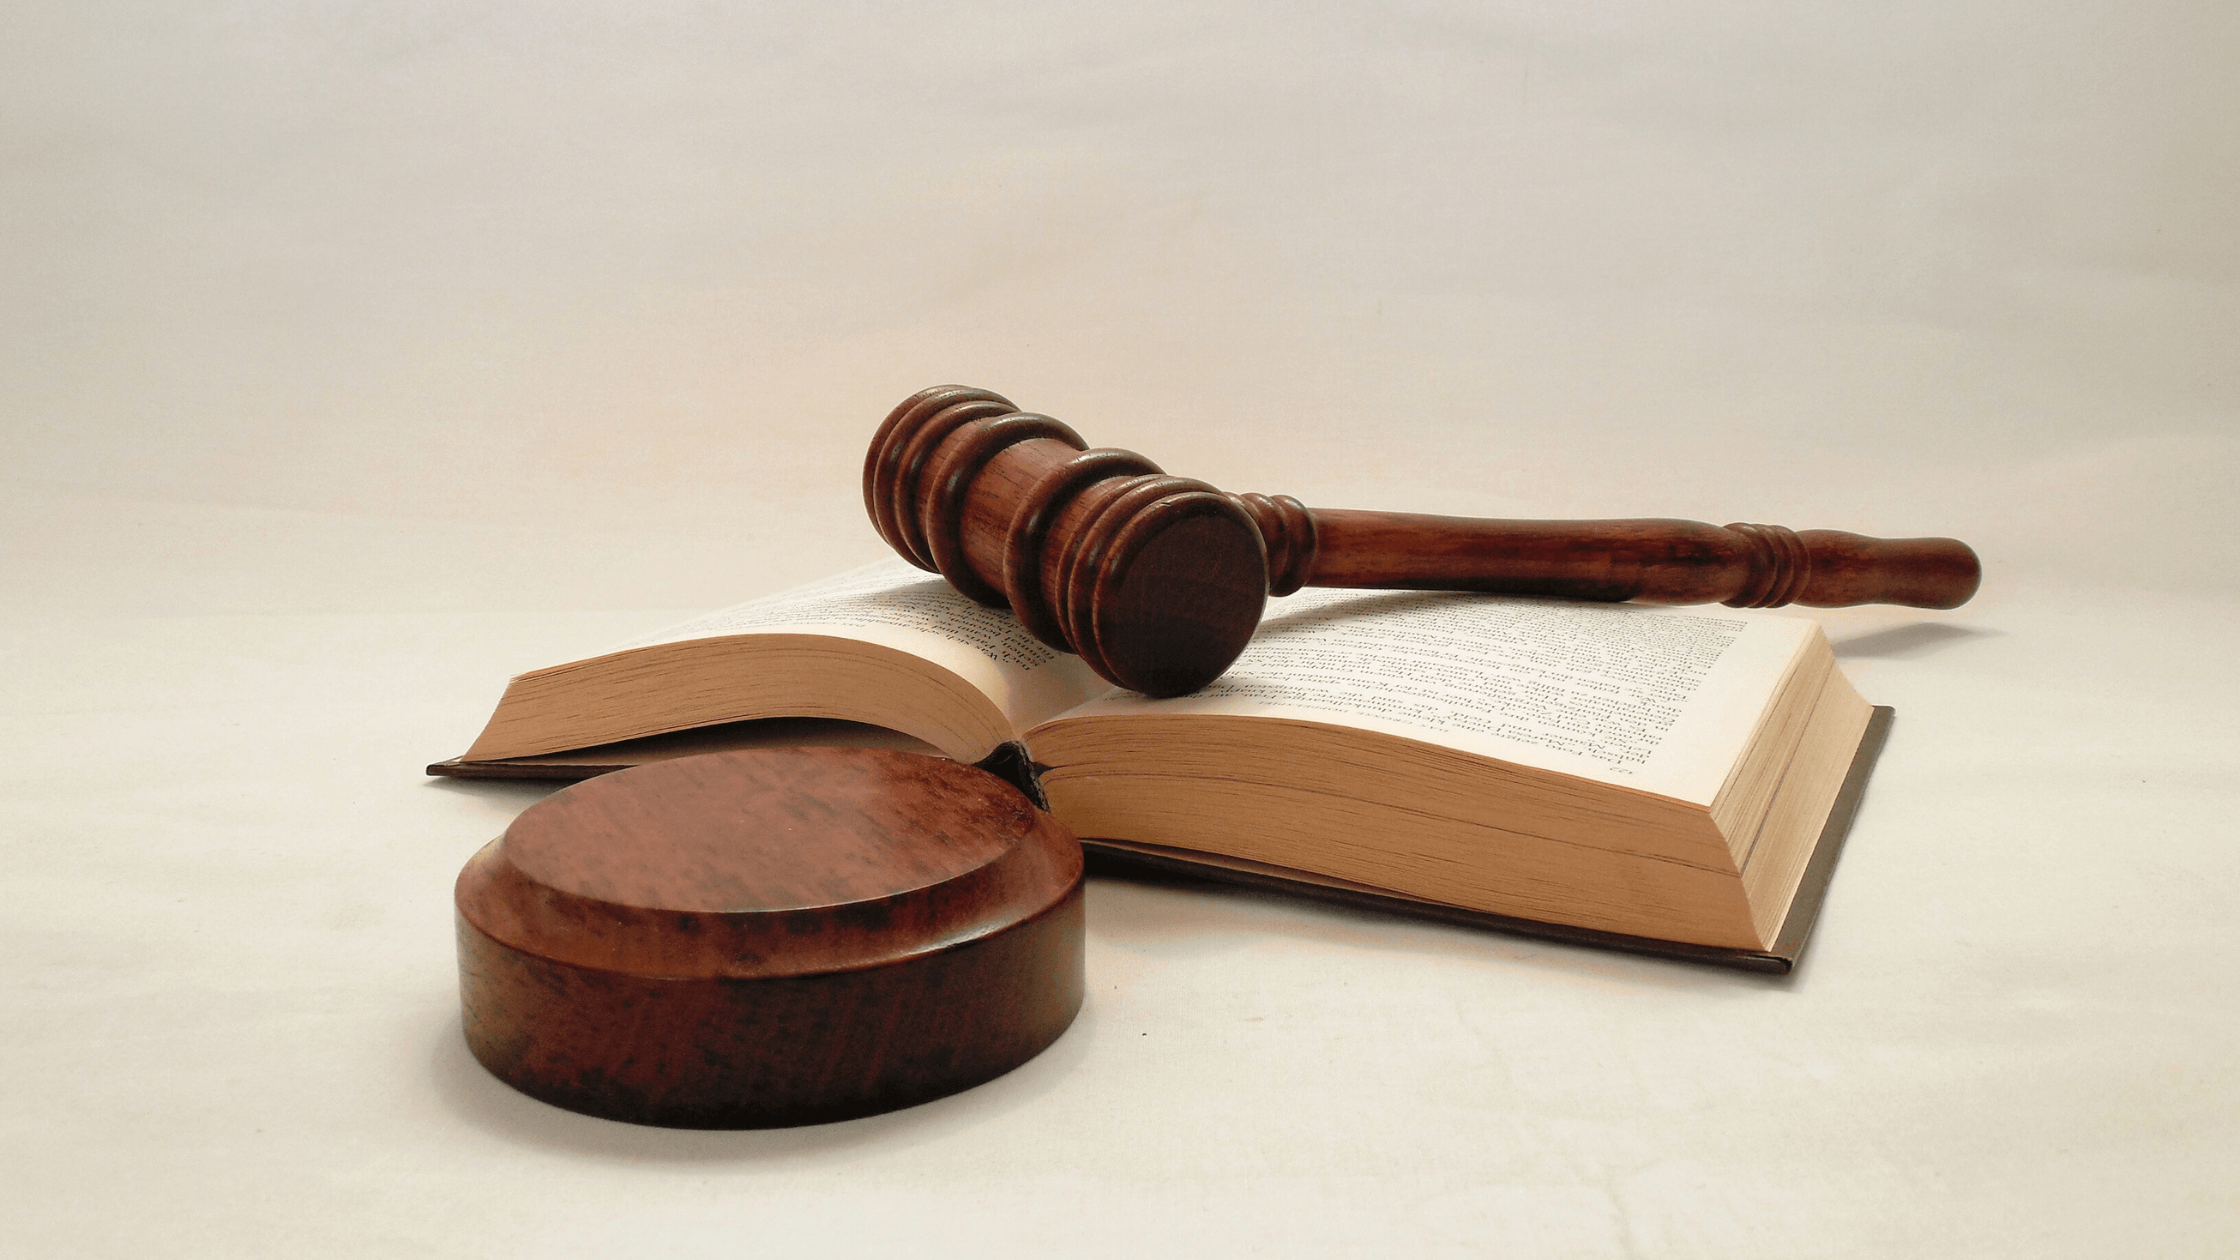 Gavel and legal book symbolizing Arizona burglary conviction consequences.